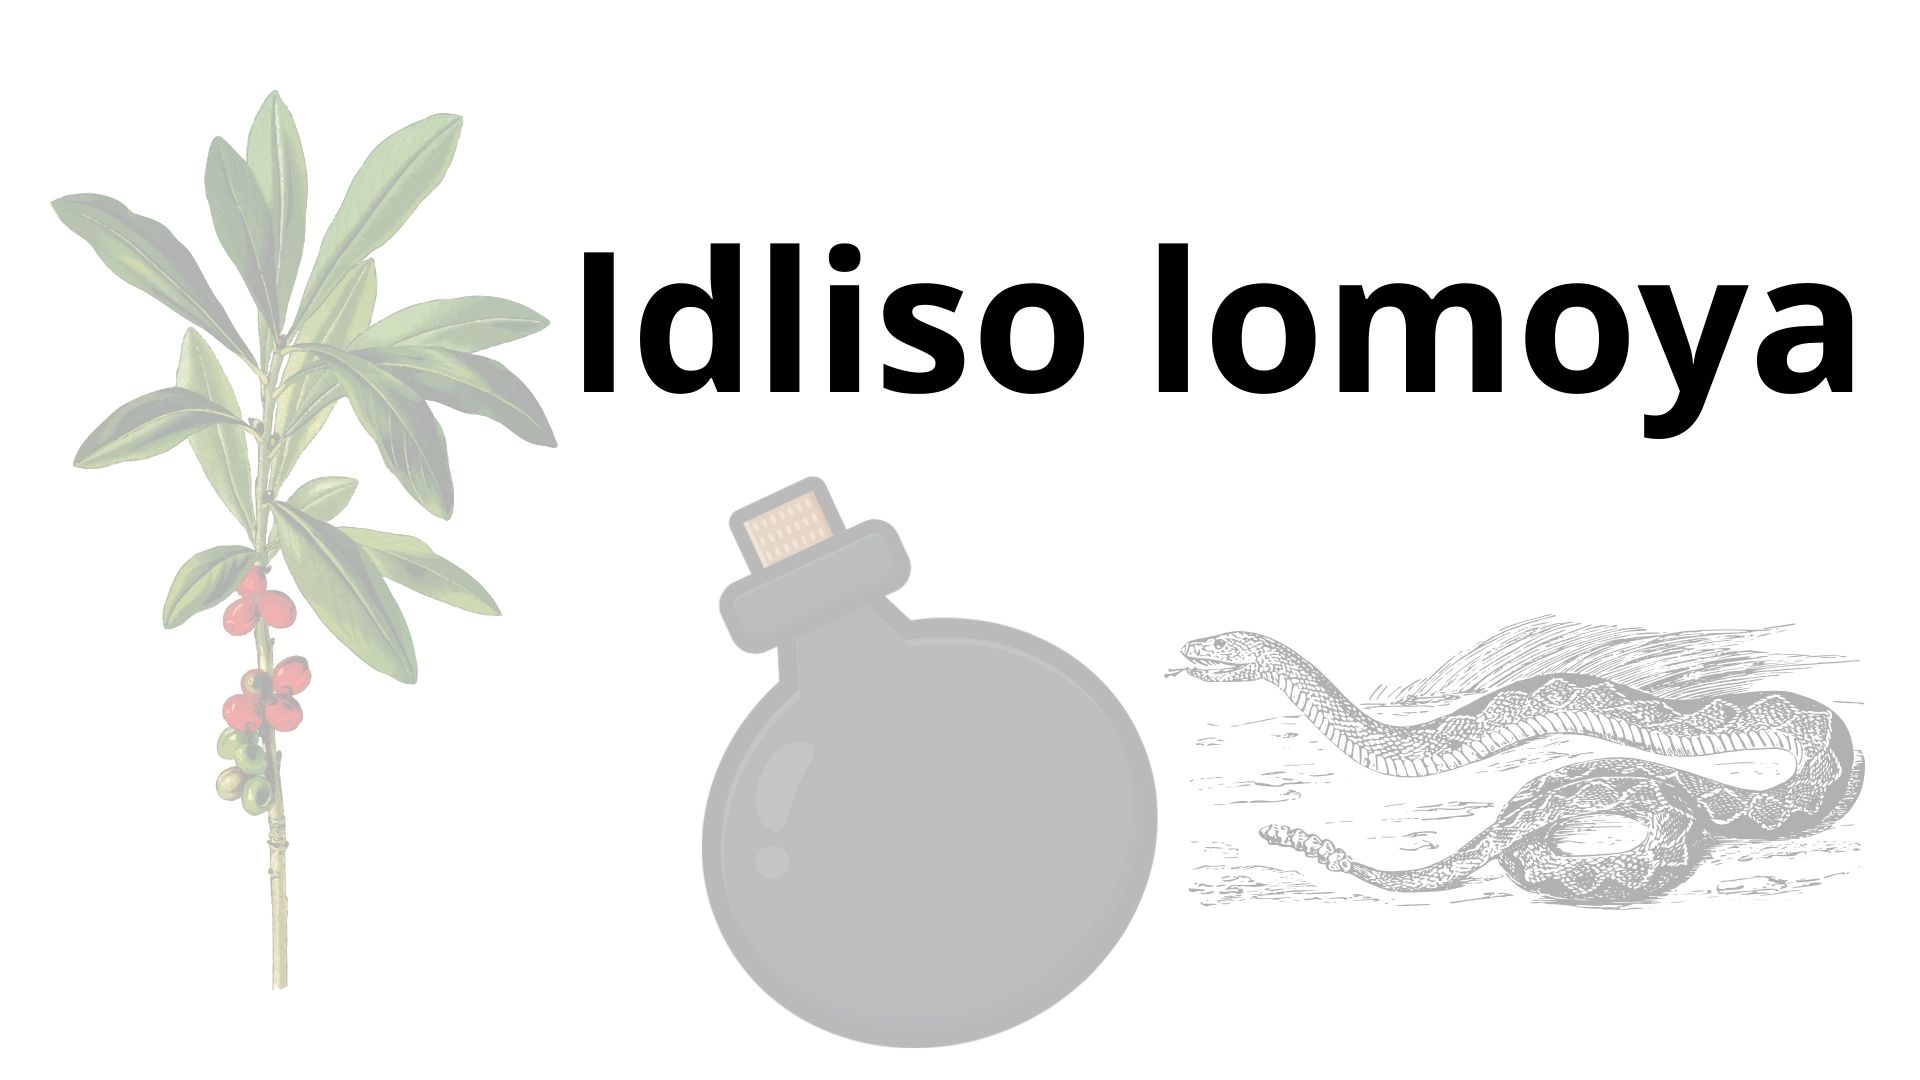 Idliso lomoya